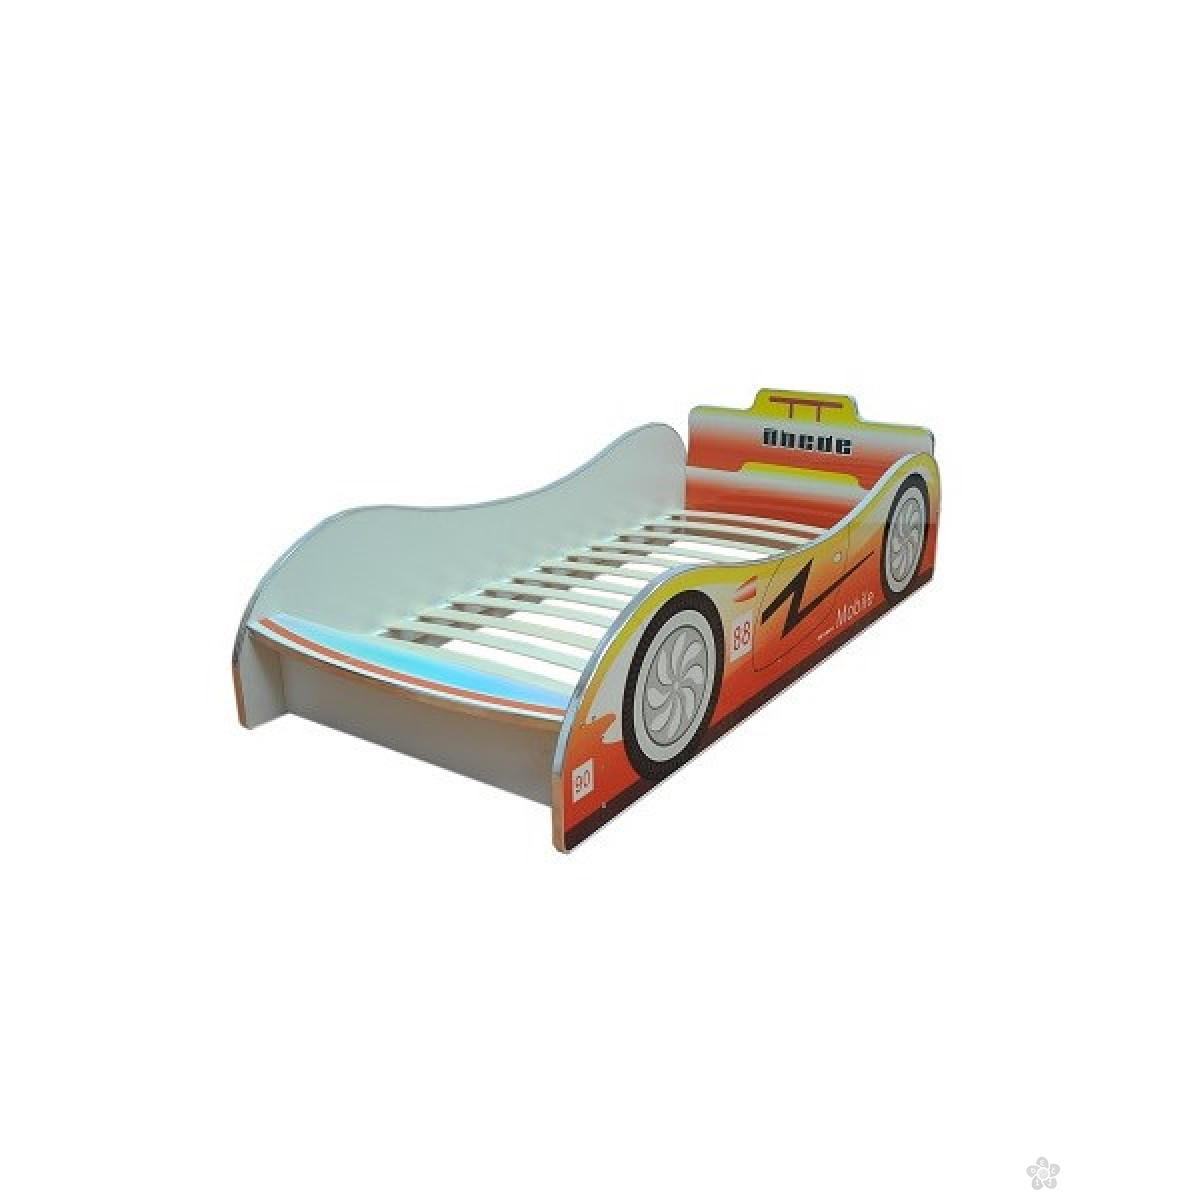 Auto krevet za decu, model 801 